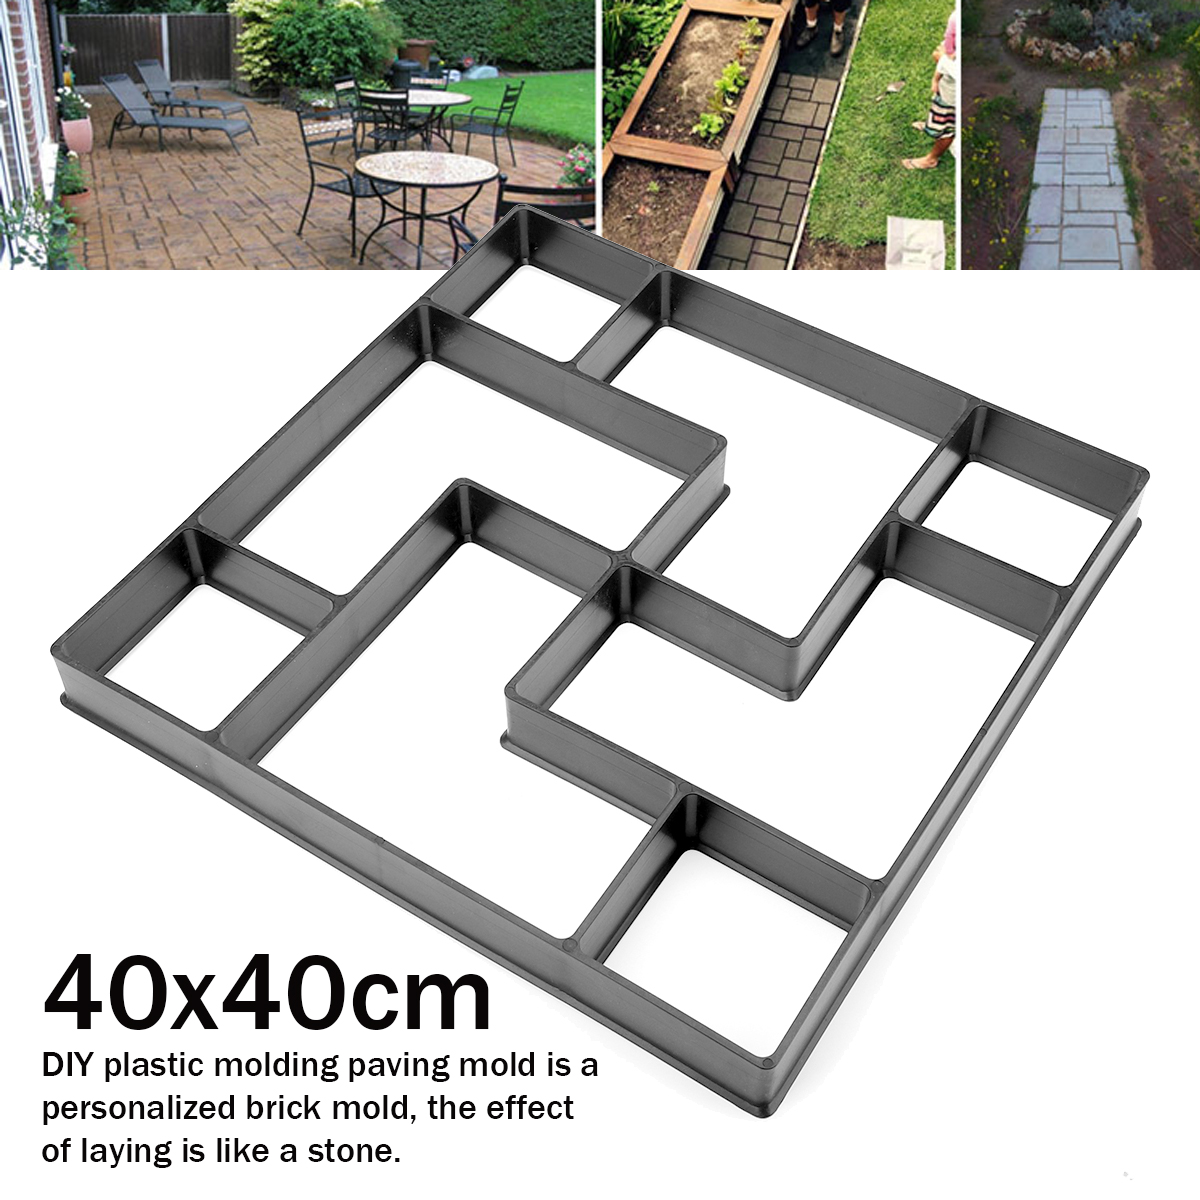 DIY-Stepping-Stone-Mold-Concrete-Paving-Pathway-Outdoor-Garden-Lawn-Cement-Brick-1683232-1